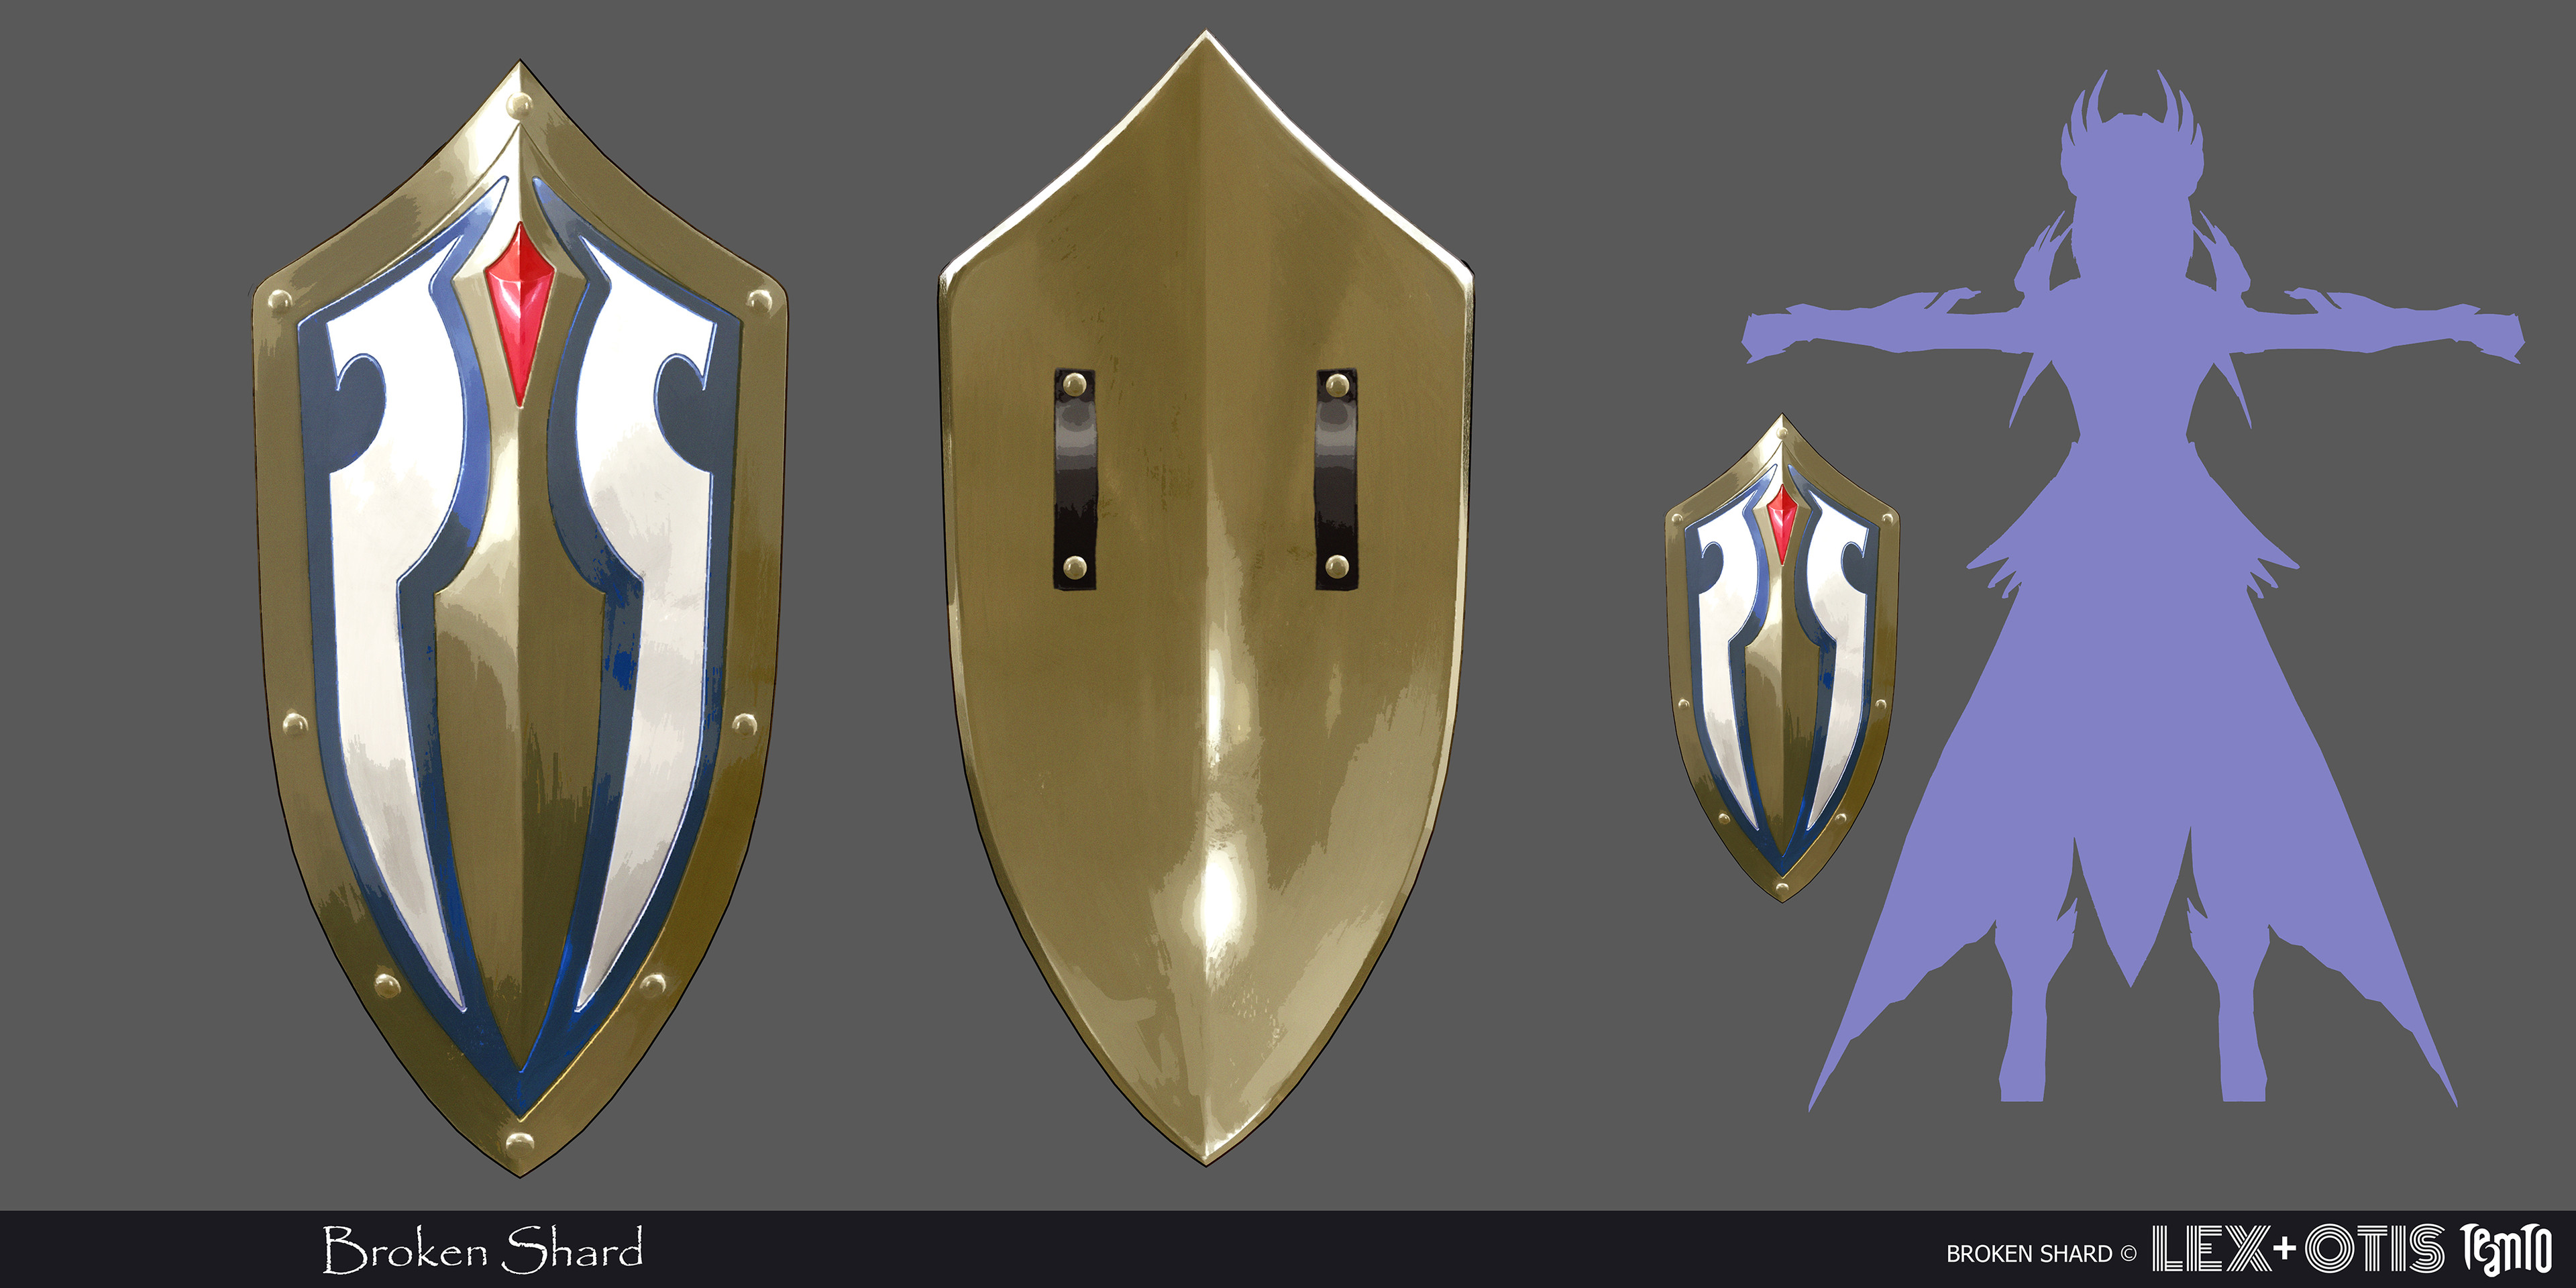 The Arbiter's shield